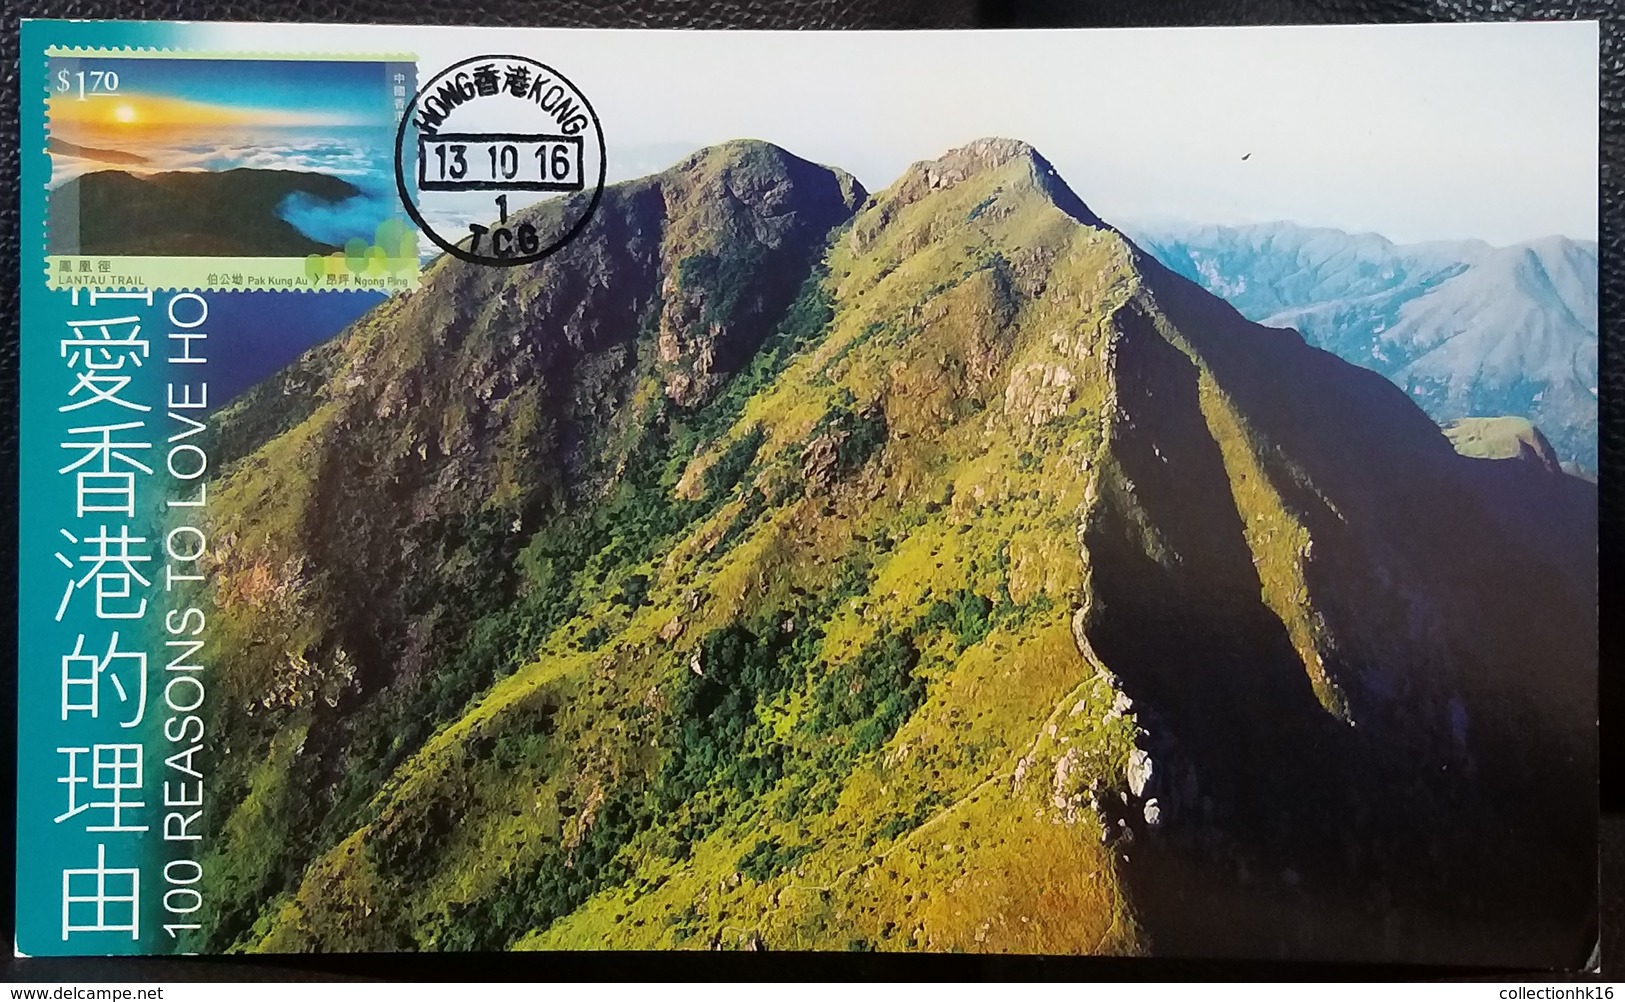 HK Hiking Trails Series No. 1: Lantau Trail Lantau Peak Sun Rise 2016 Hong Kong Maximum Card MC (Location Postmark) - Maximum Cards